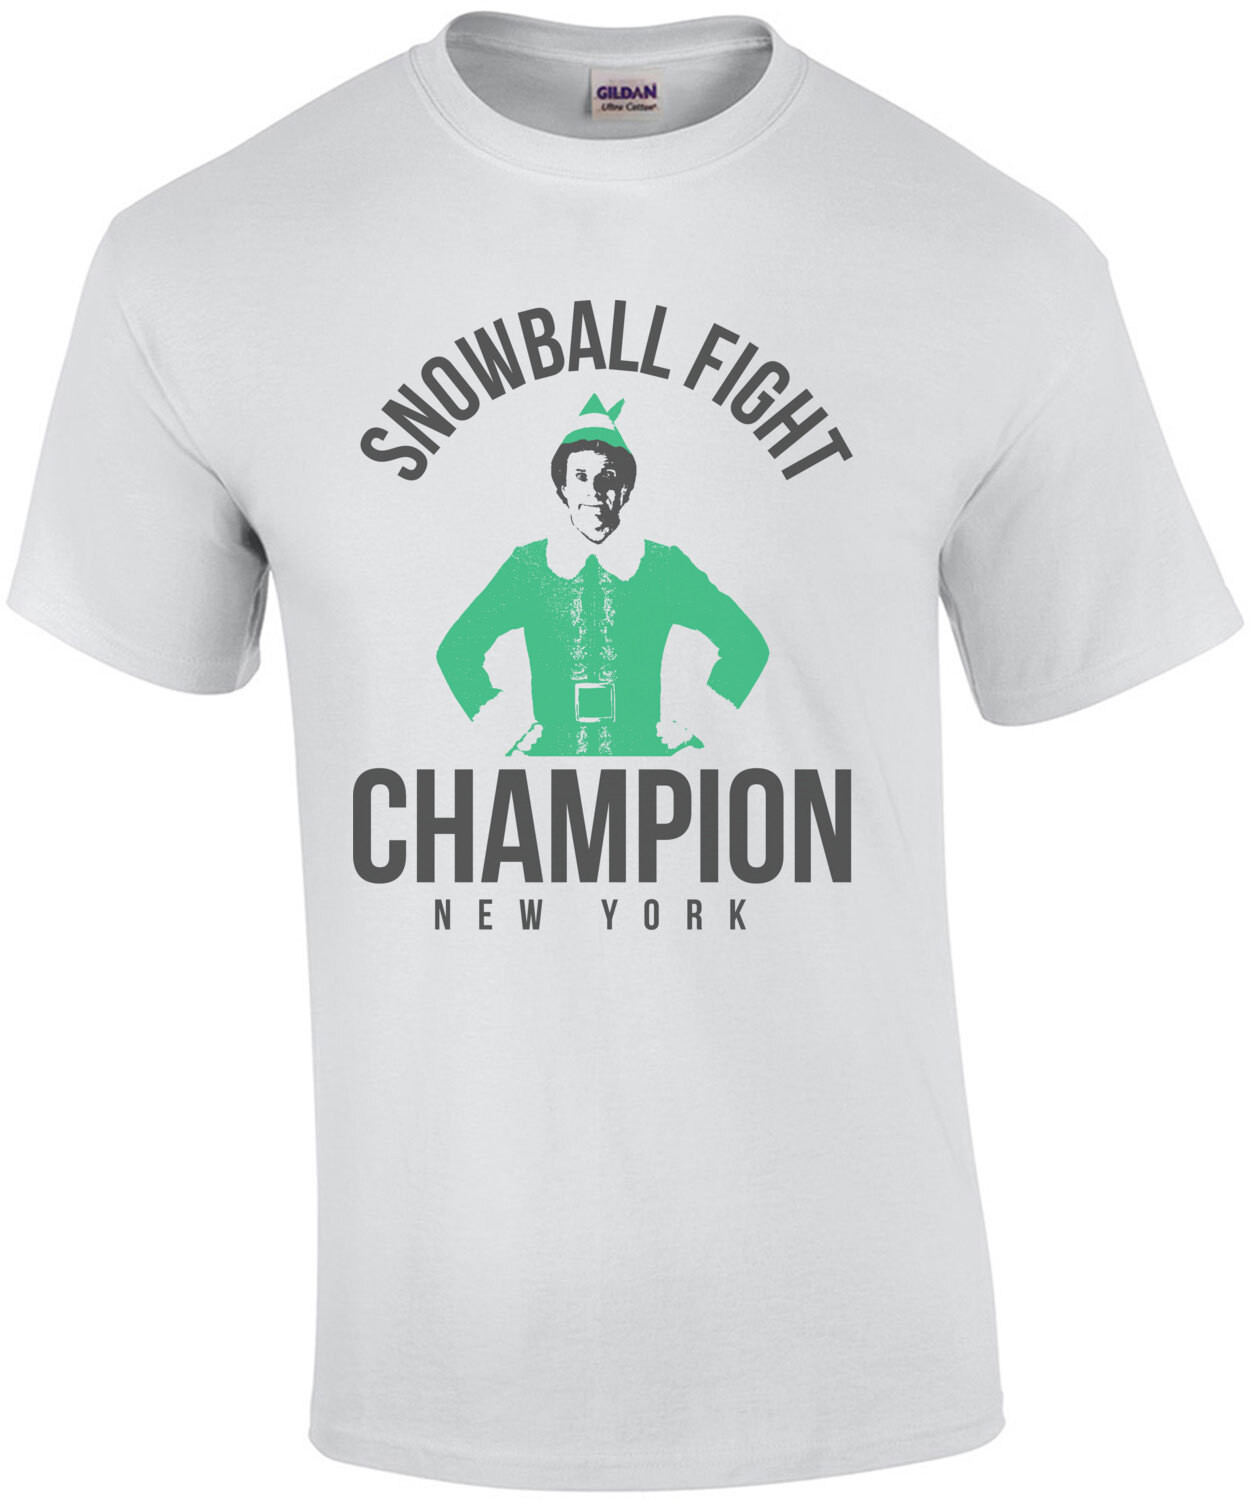 Snowball Fight Champion - New York - Elf Movie Christmas T-Shirt